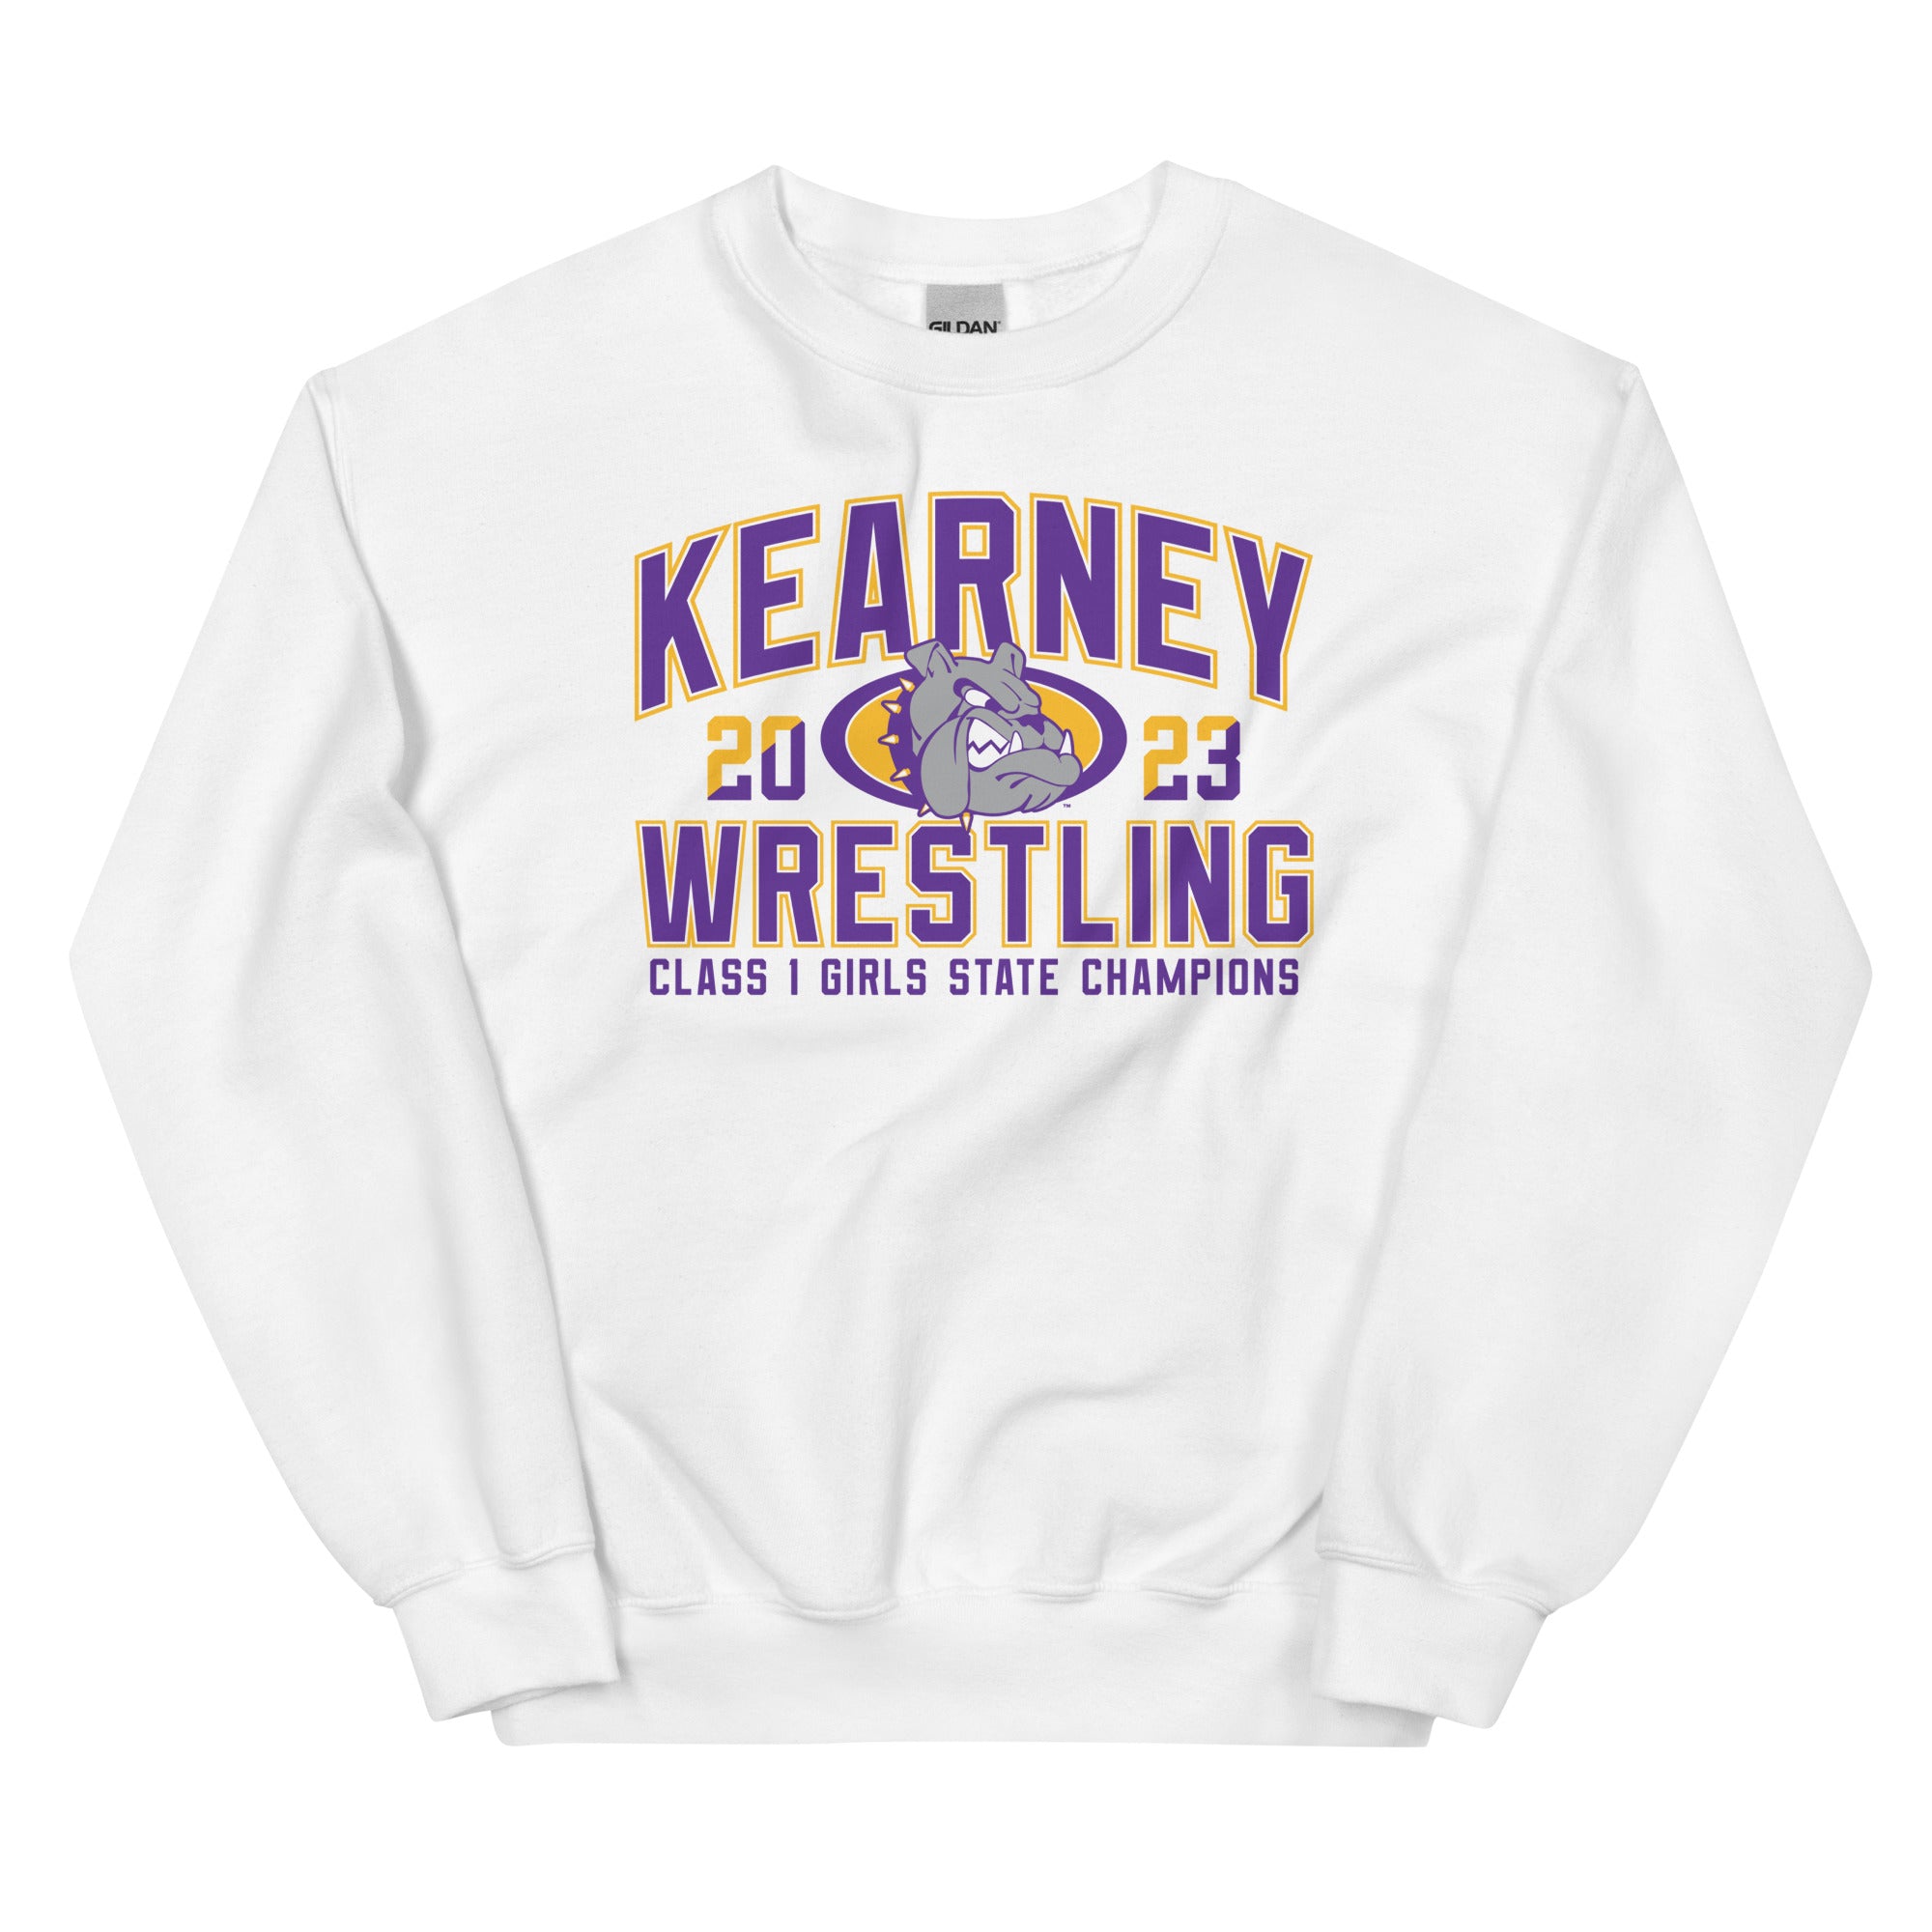 Kearney Wrestling Girls State Champs White Unisex Crew Neck Sweatshirt